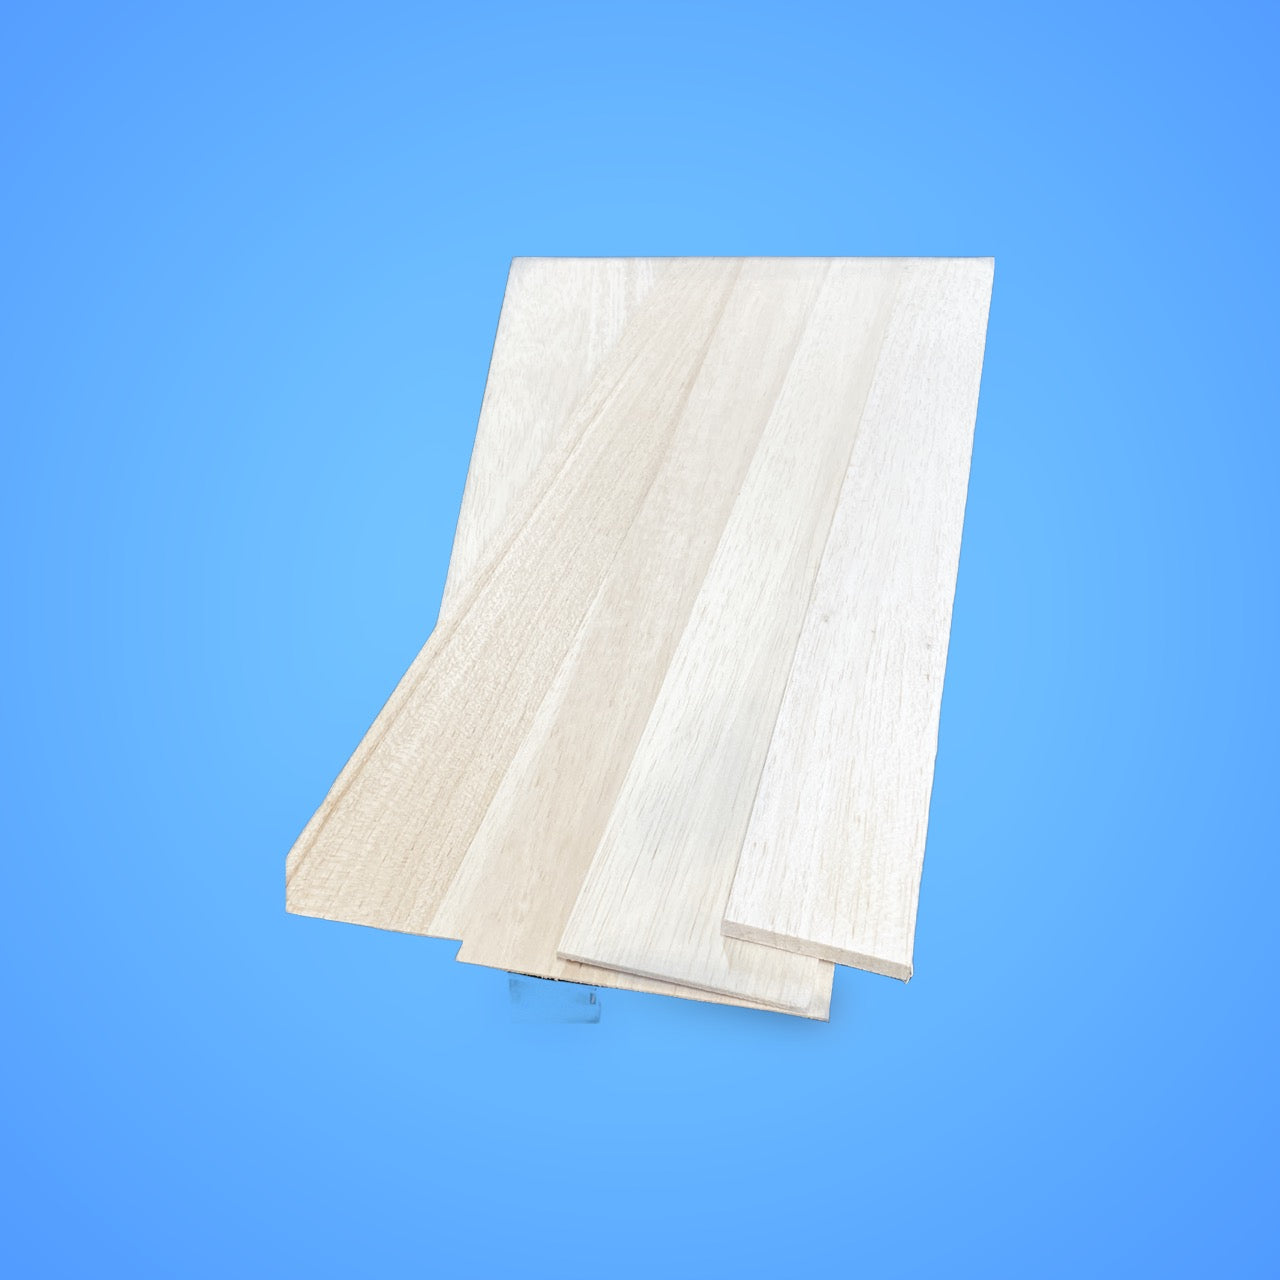 1/8 x 4 x 36 Aero Light Balsa Wood Sheets